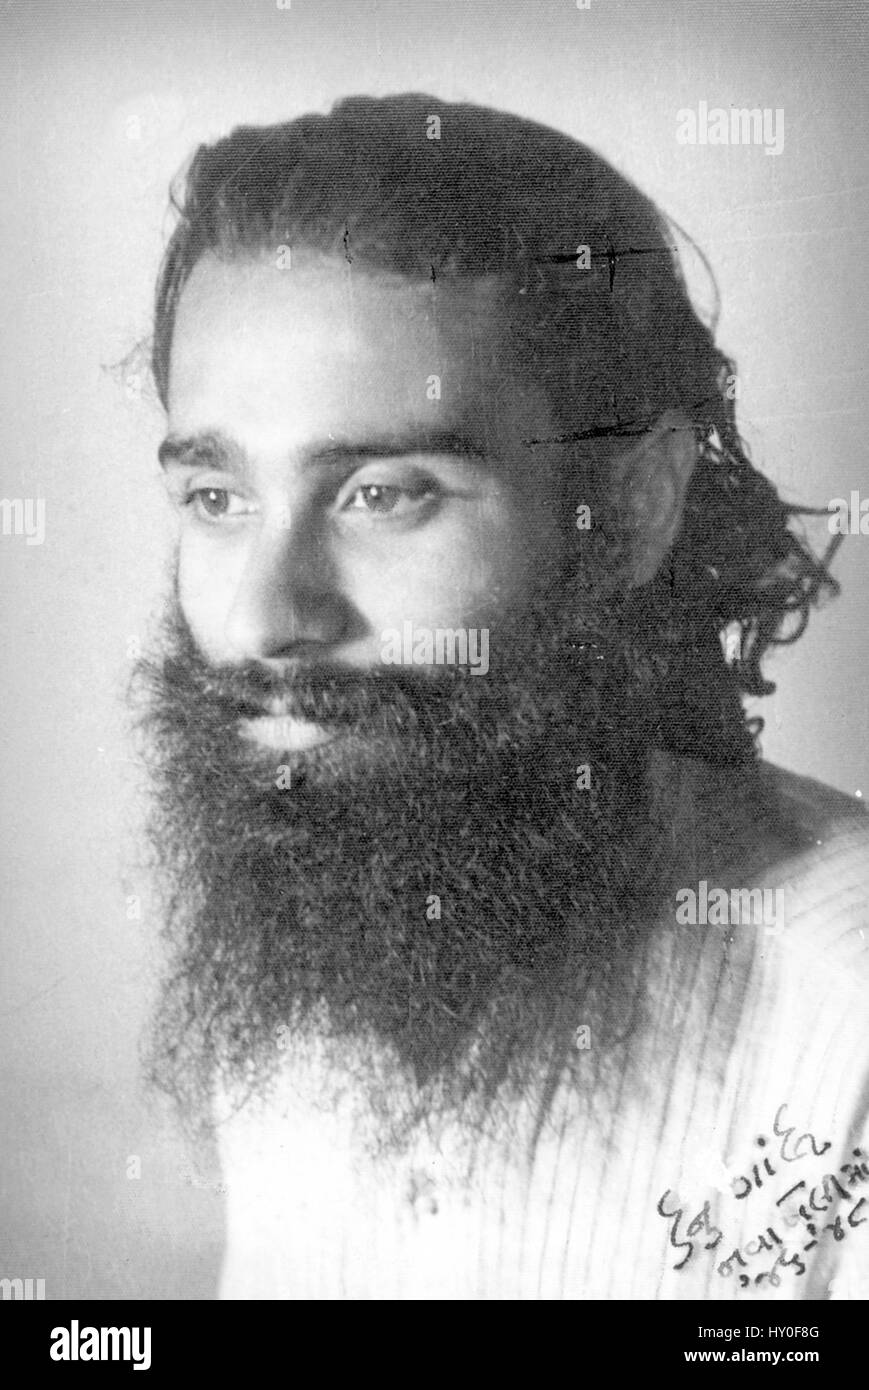 Kanu gandhi, grandnephew of mahatma gandhi, india, asia, 1947 Stock Photo